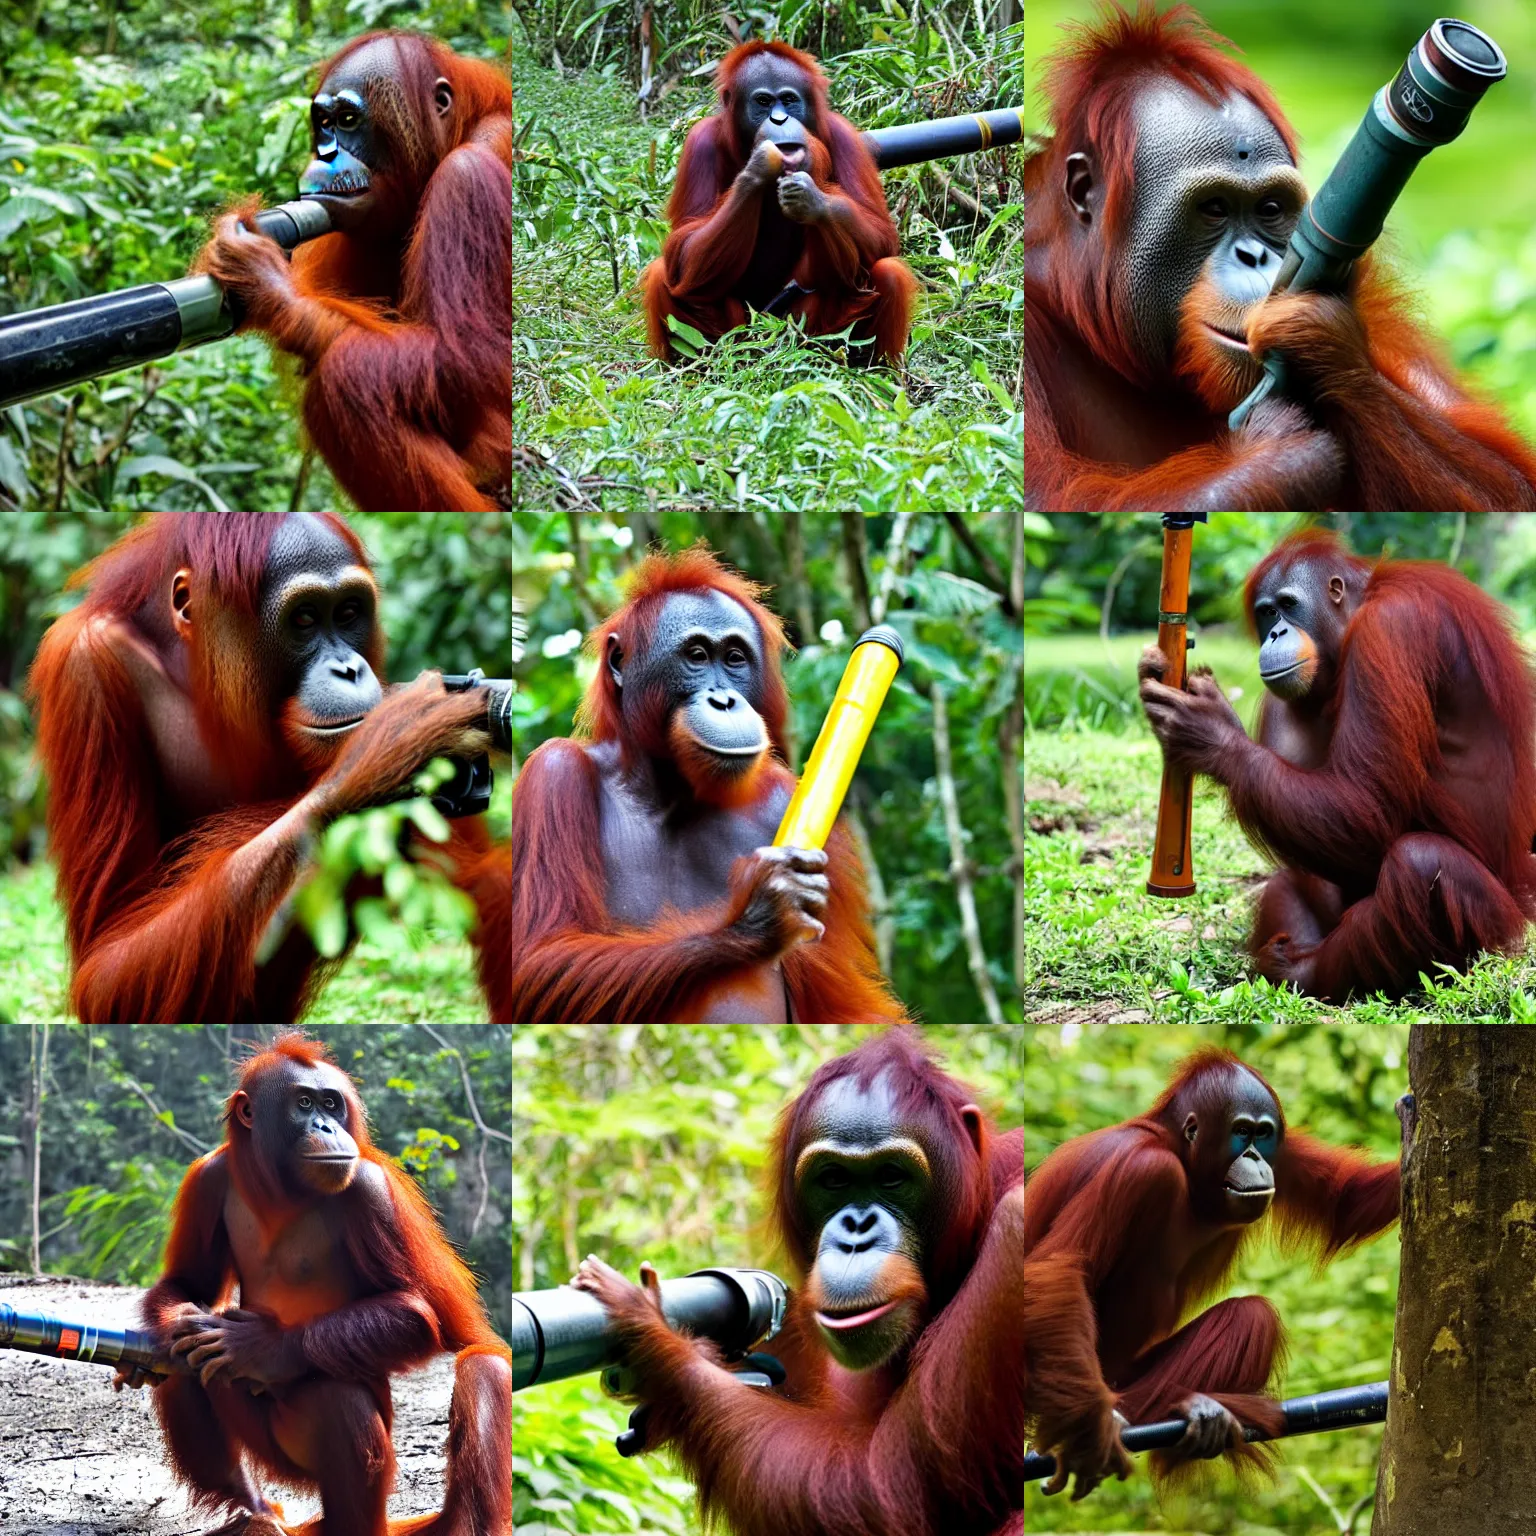 Prompt: an orangutan firing a bazooka